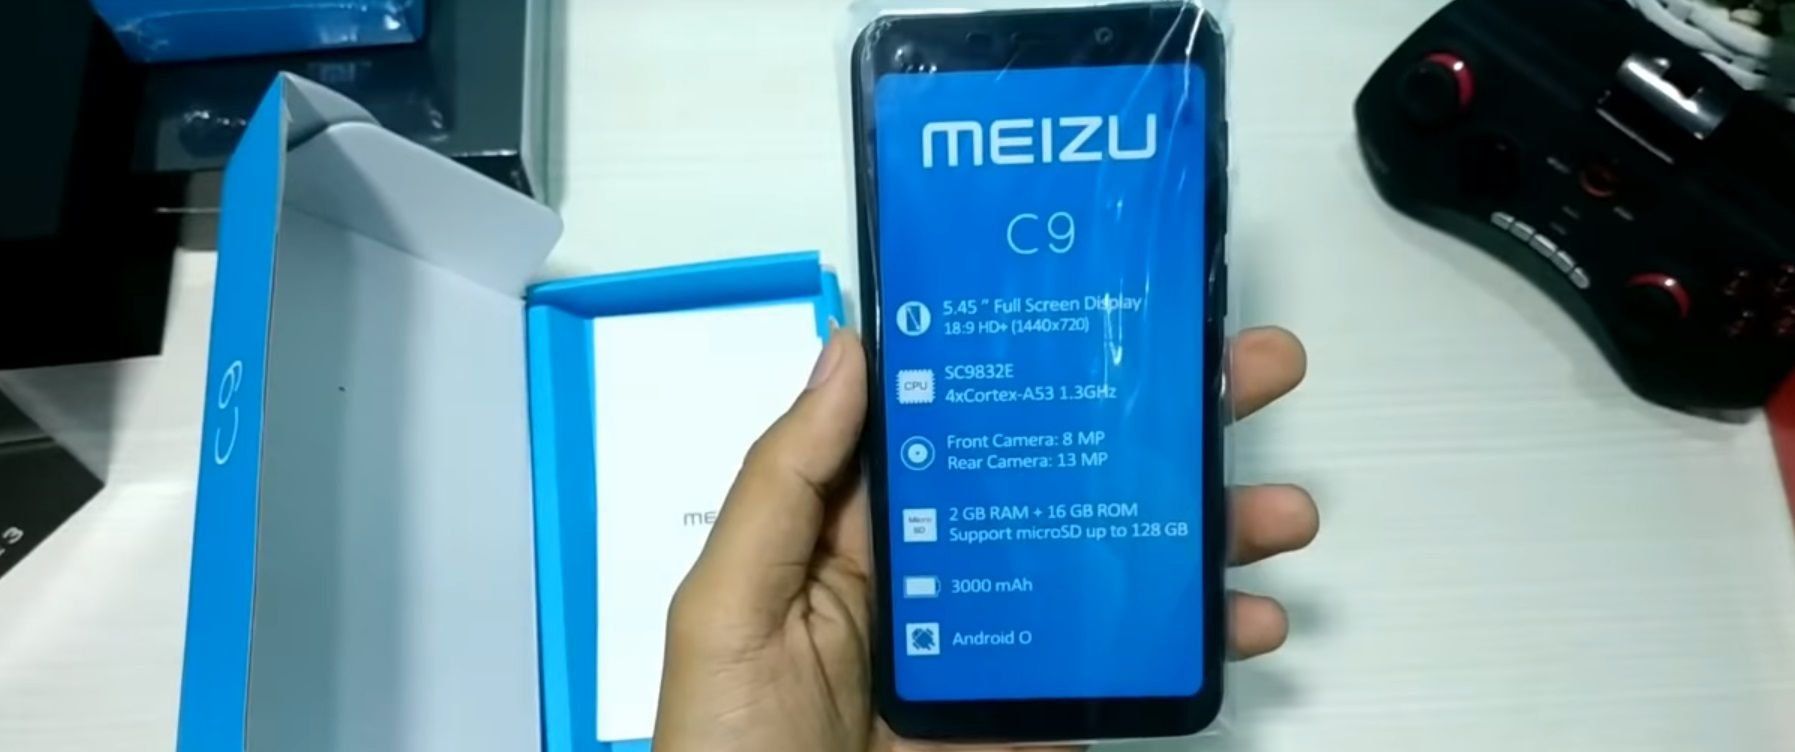 Meizu C9 and C9 Pro smartphones - advantages and disadvantages